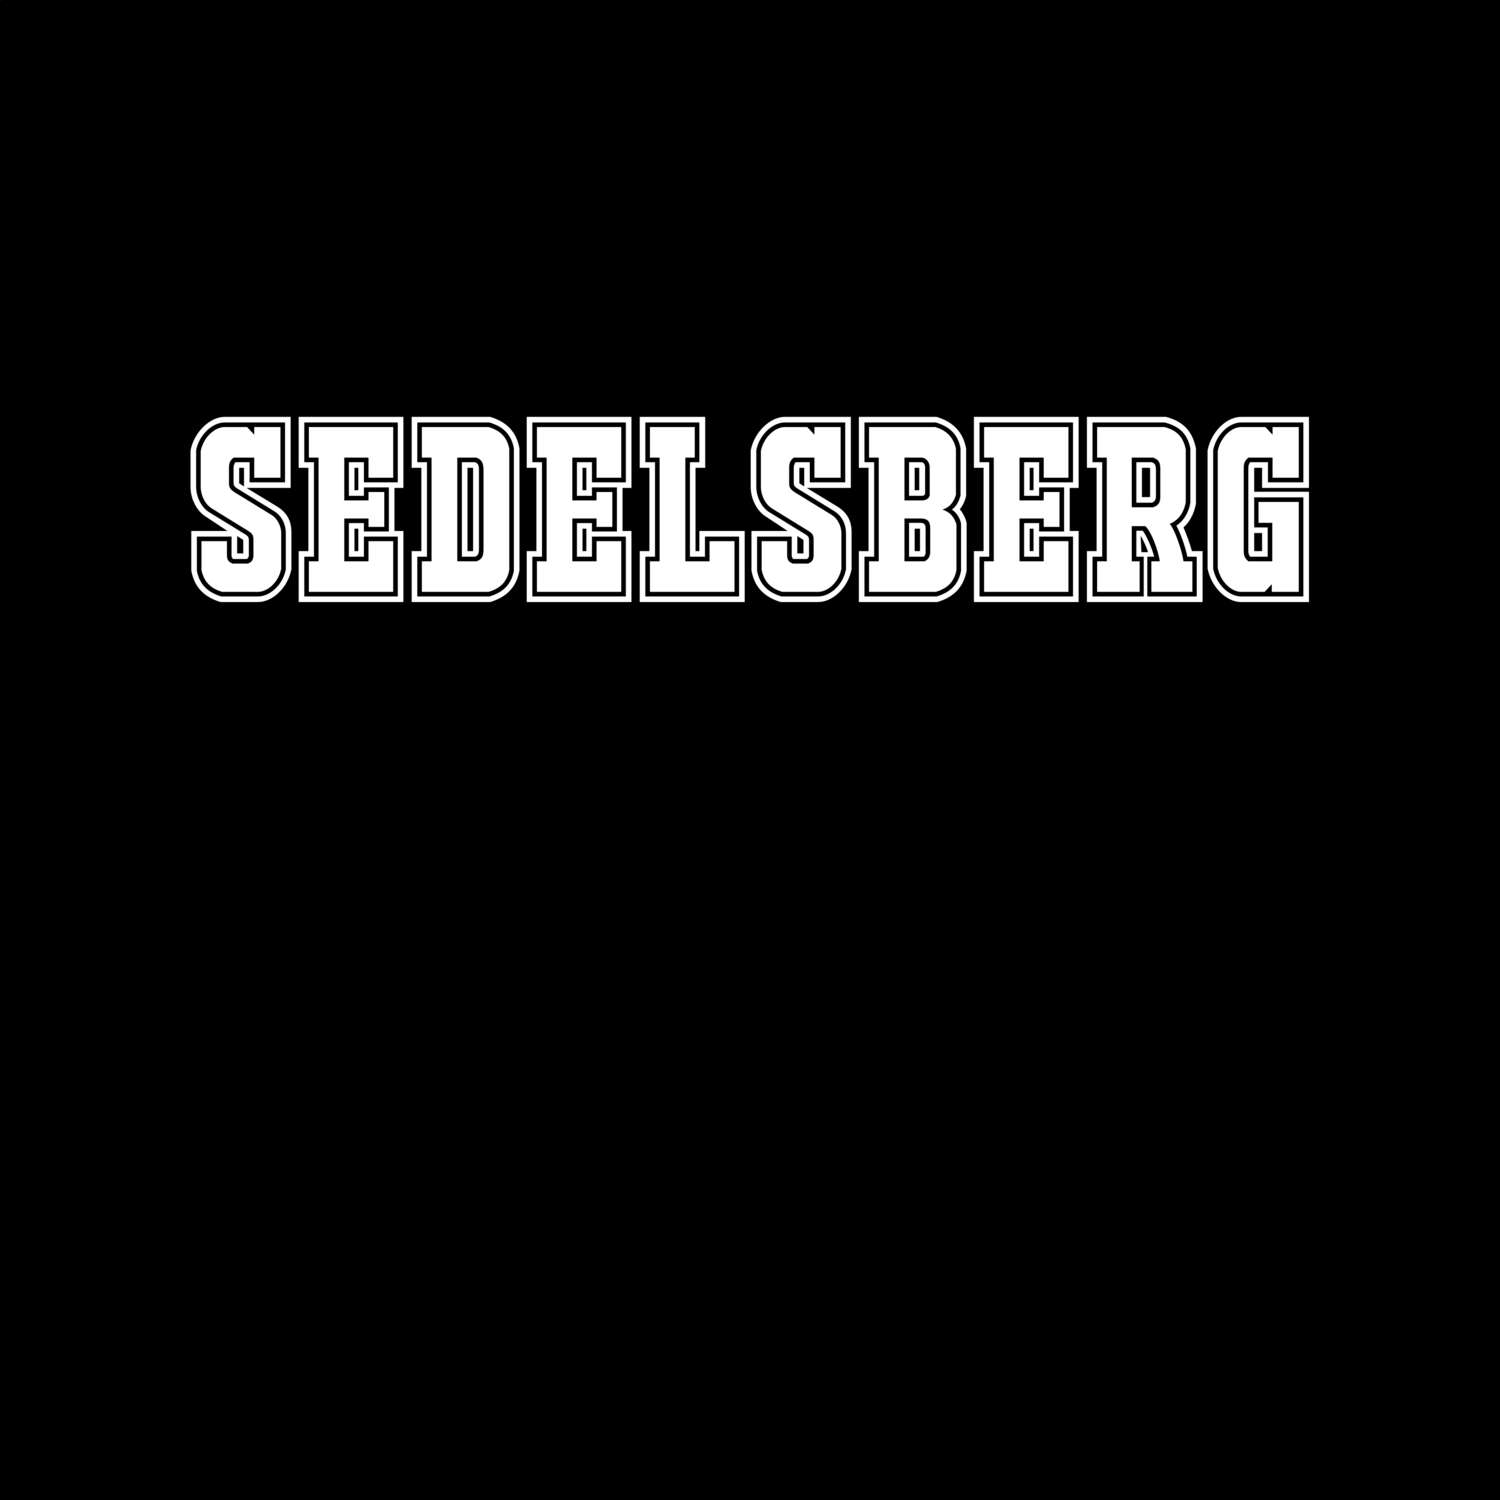 Sedelsberg T-Shirt »Classic«